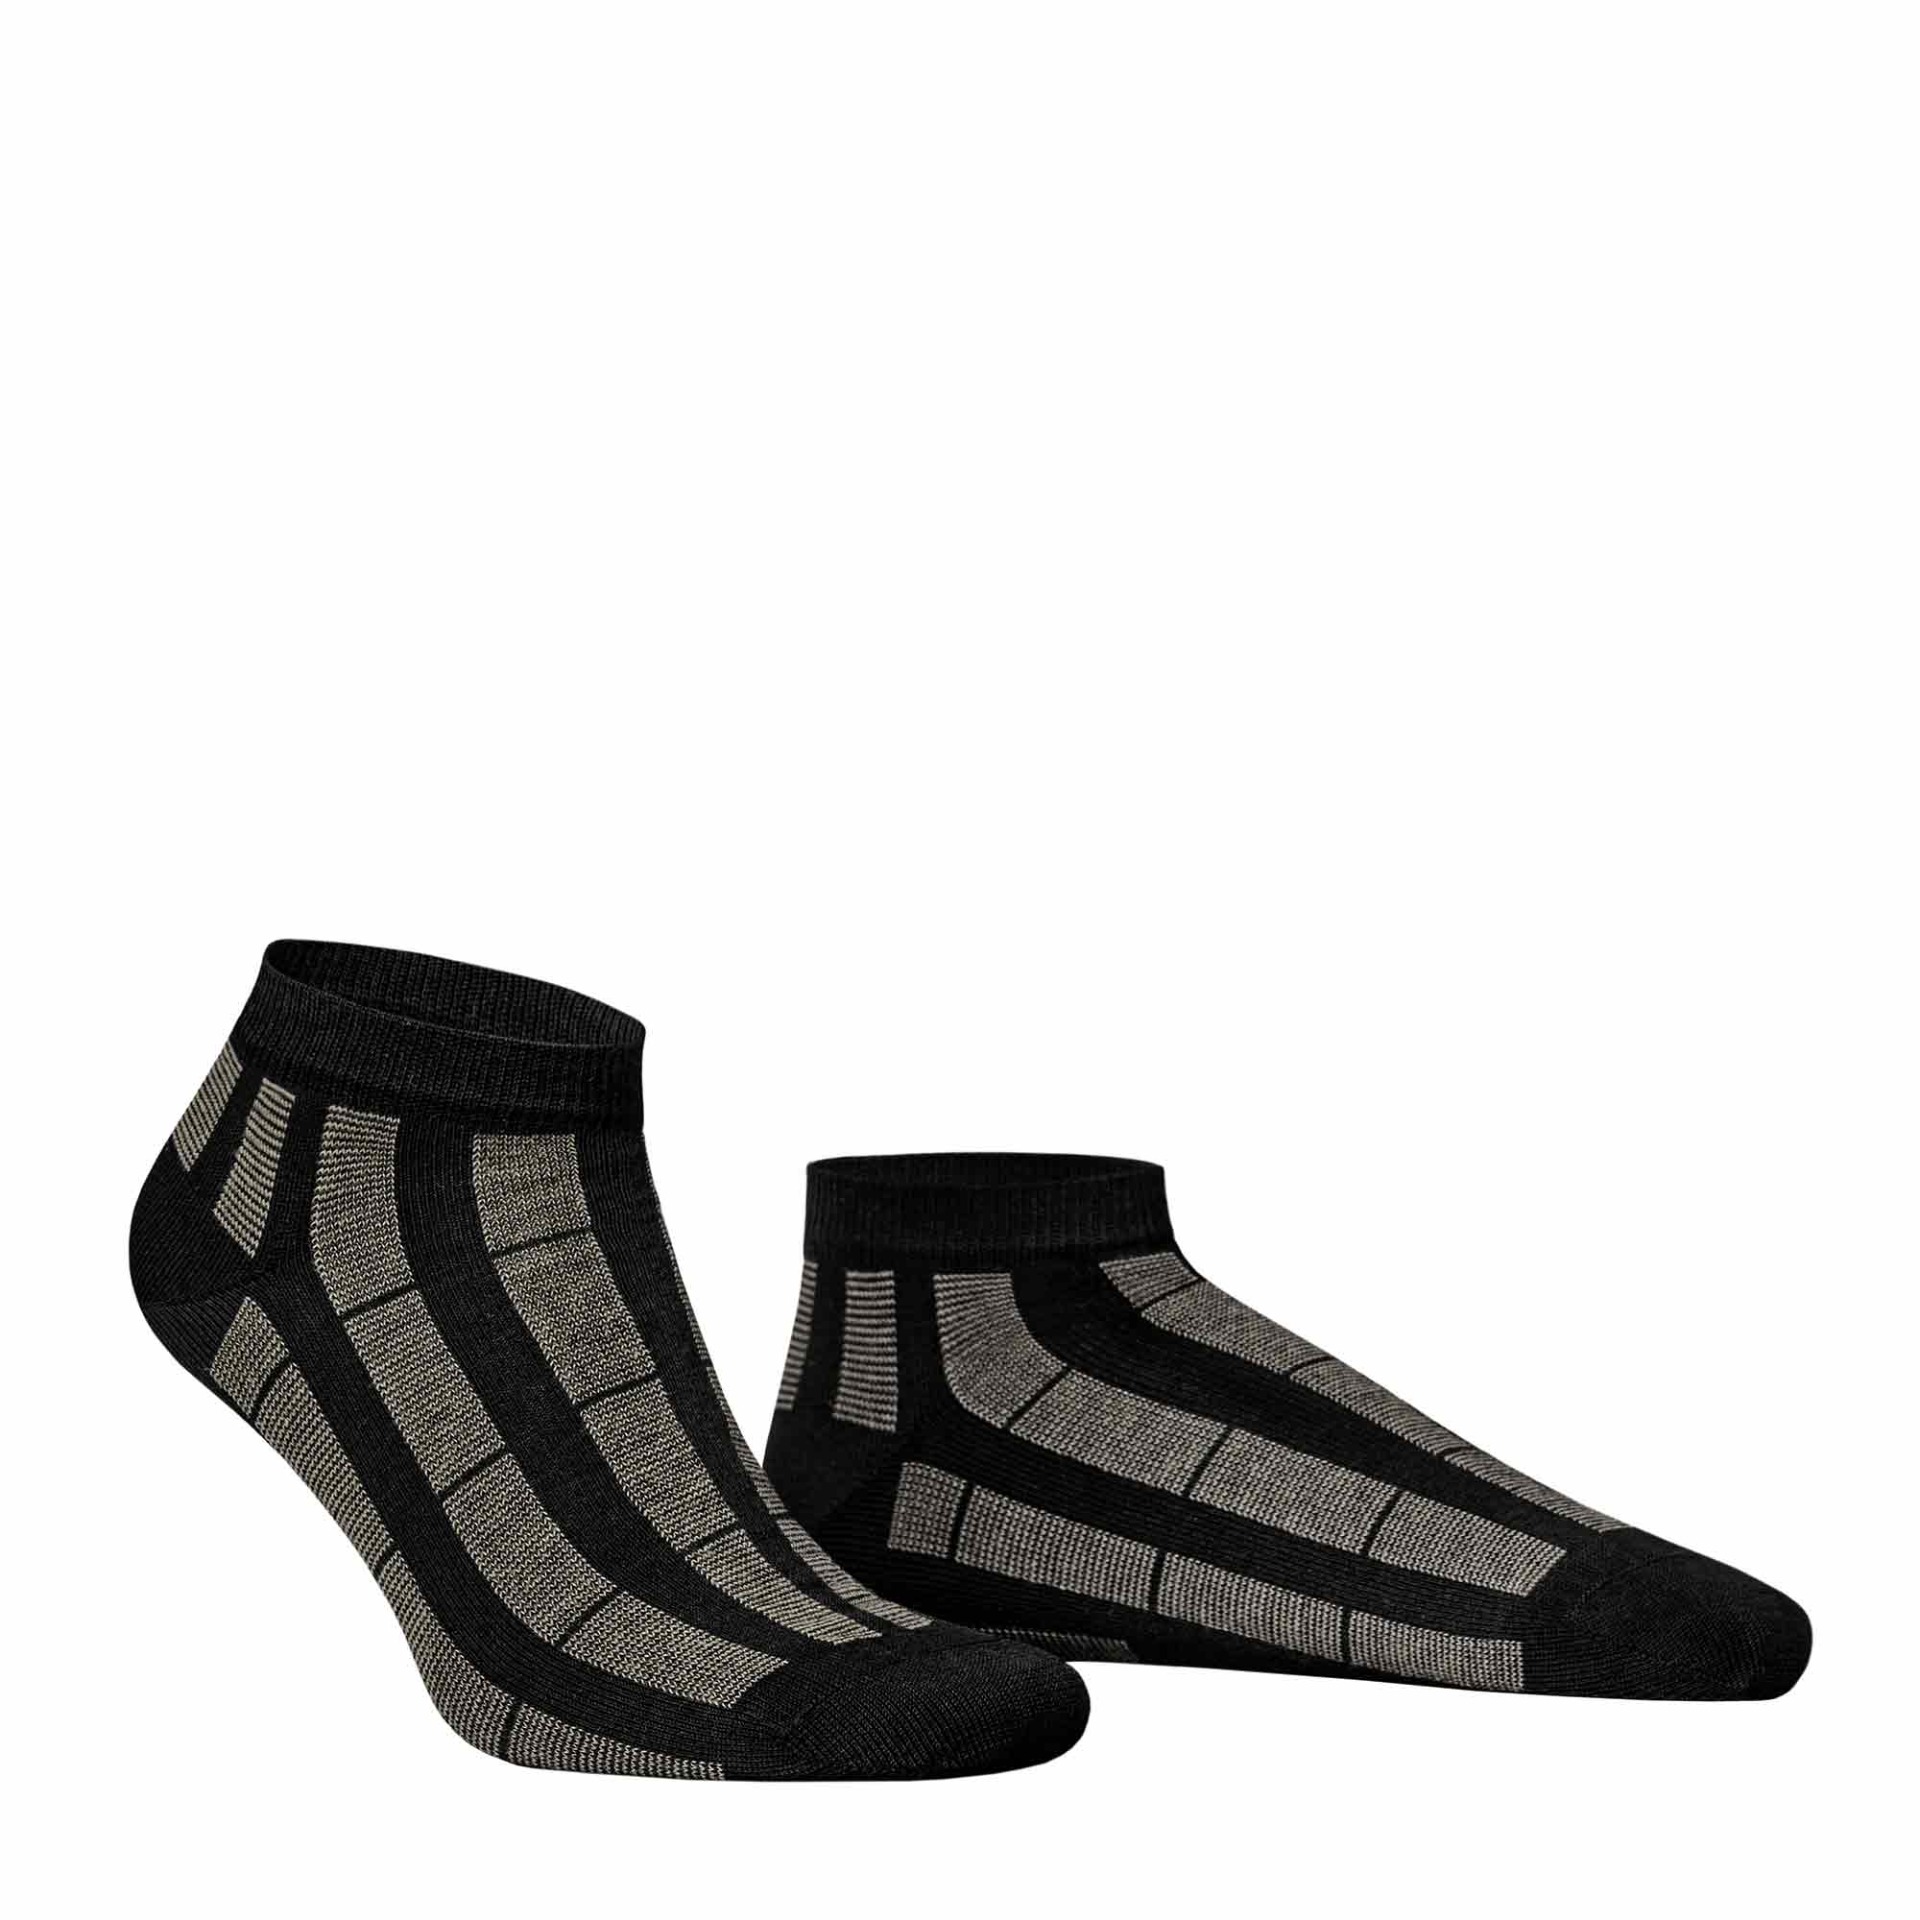 HUDSON Herren PIN -  39/42 - Sneaker Socken mit Streifen-Muster - Black (Schwarz)